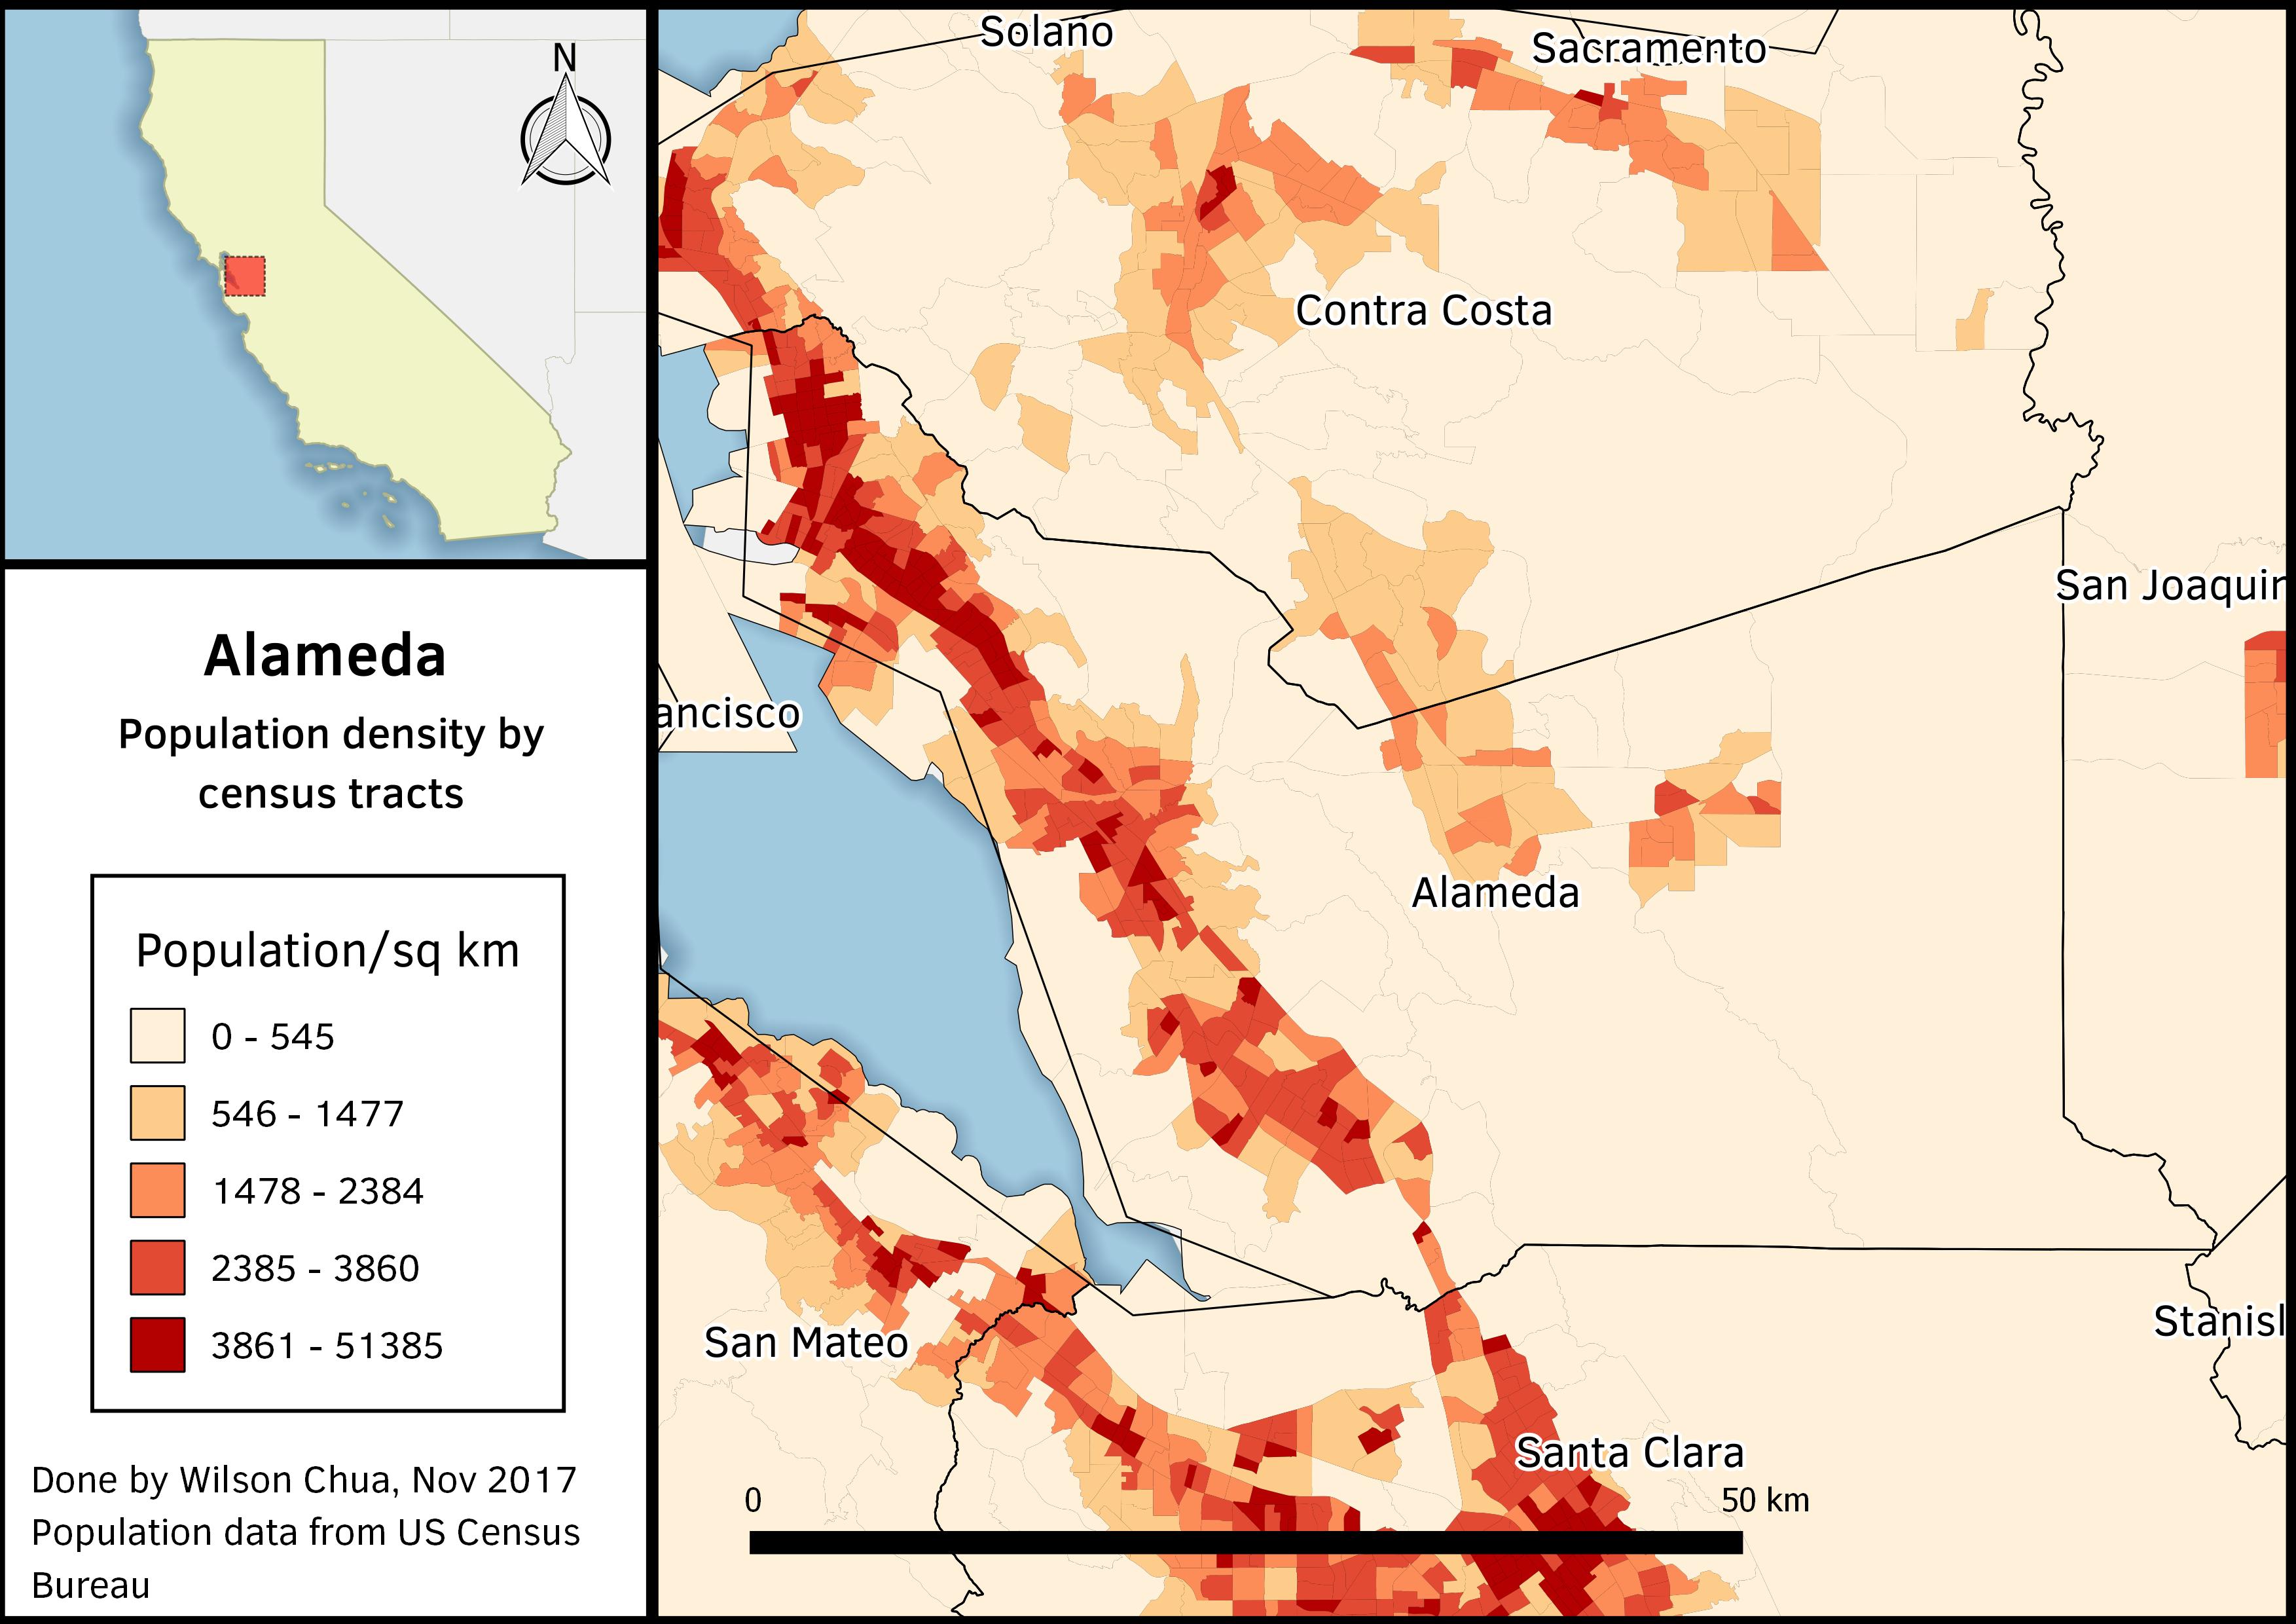 Population Density of Alameda, per Census Tract 